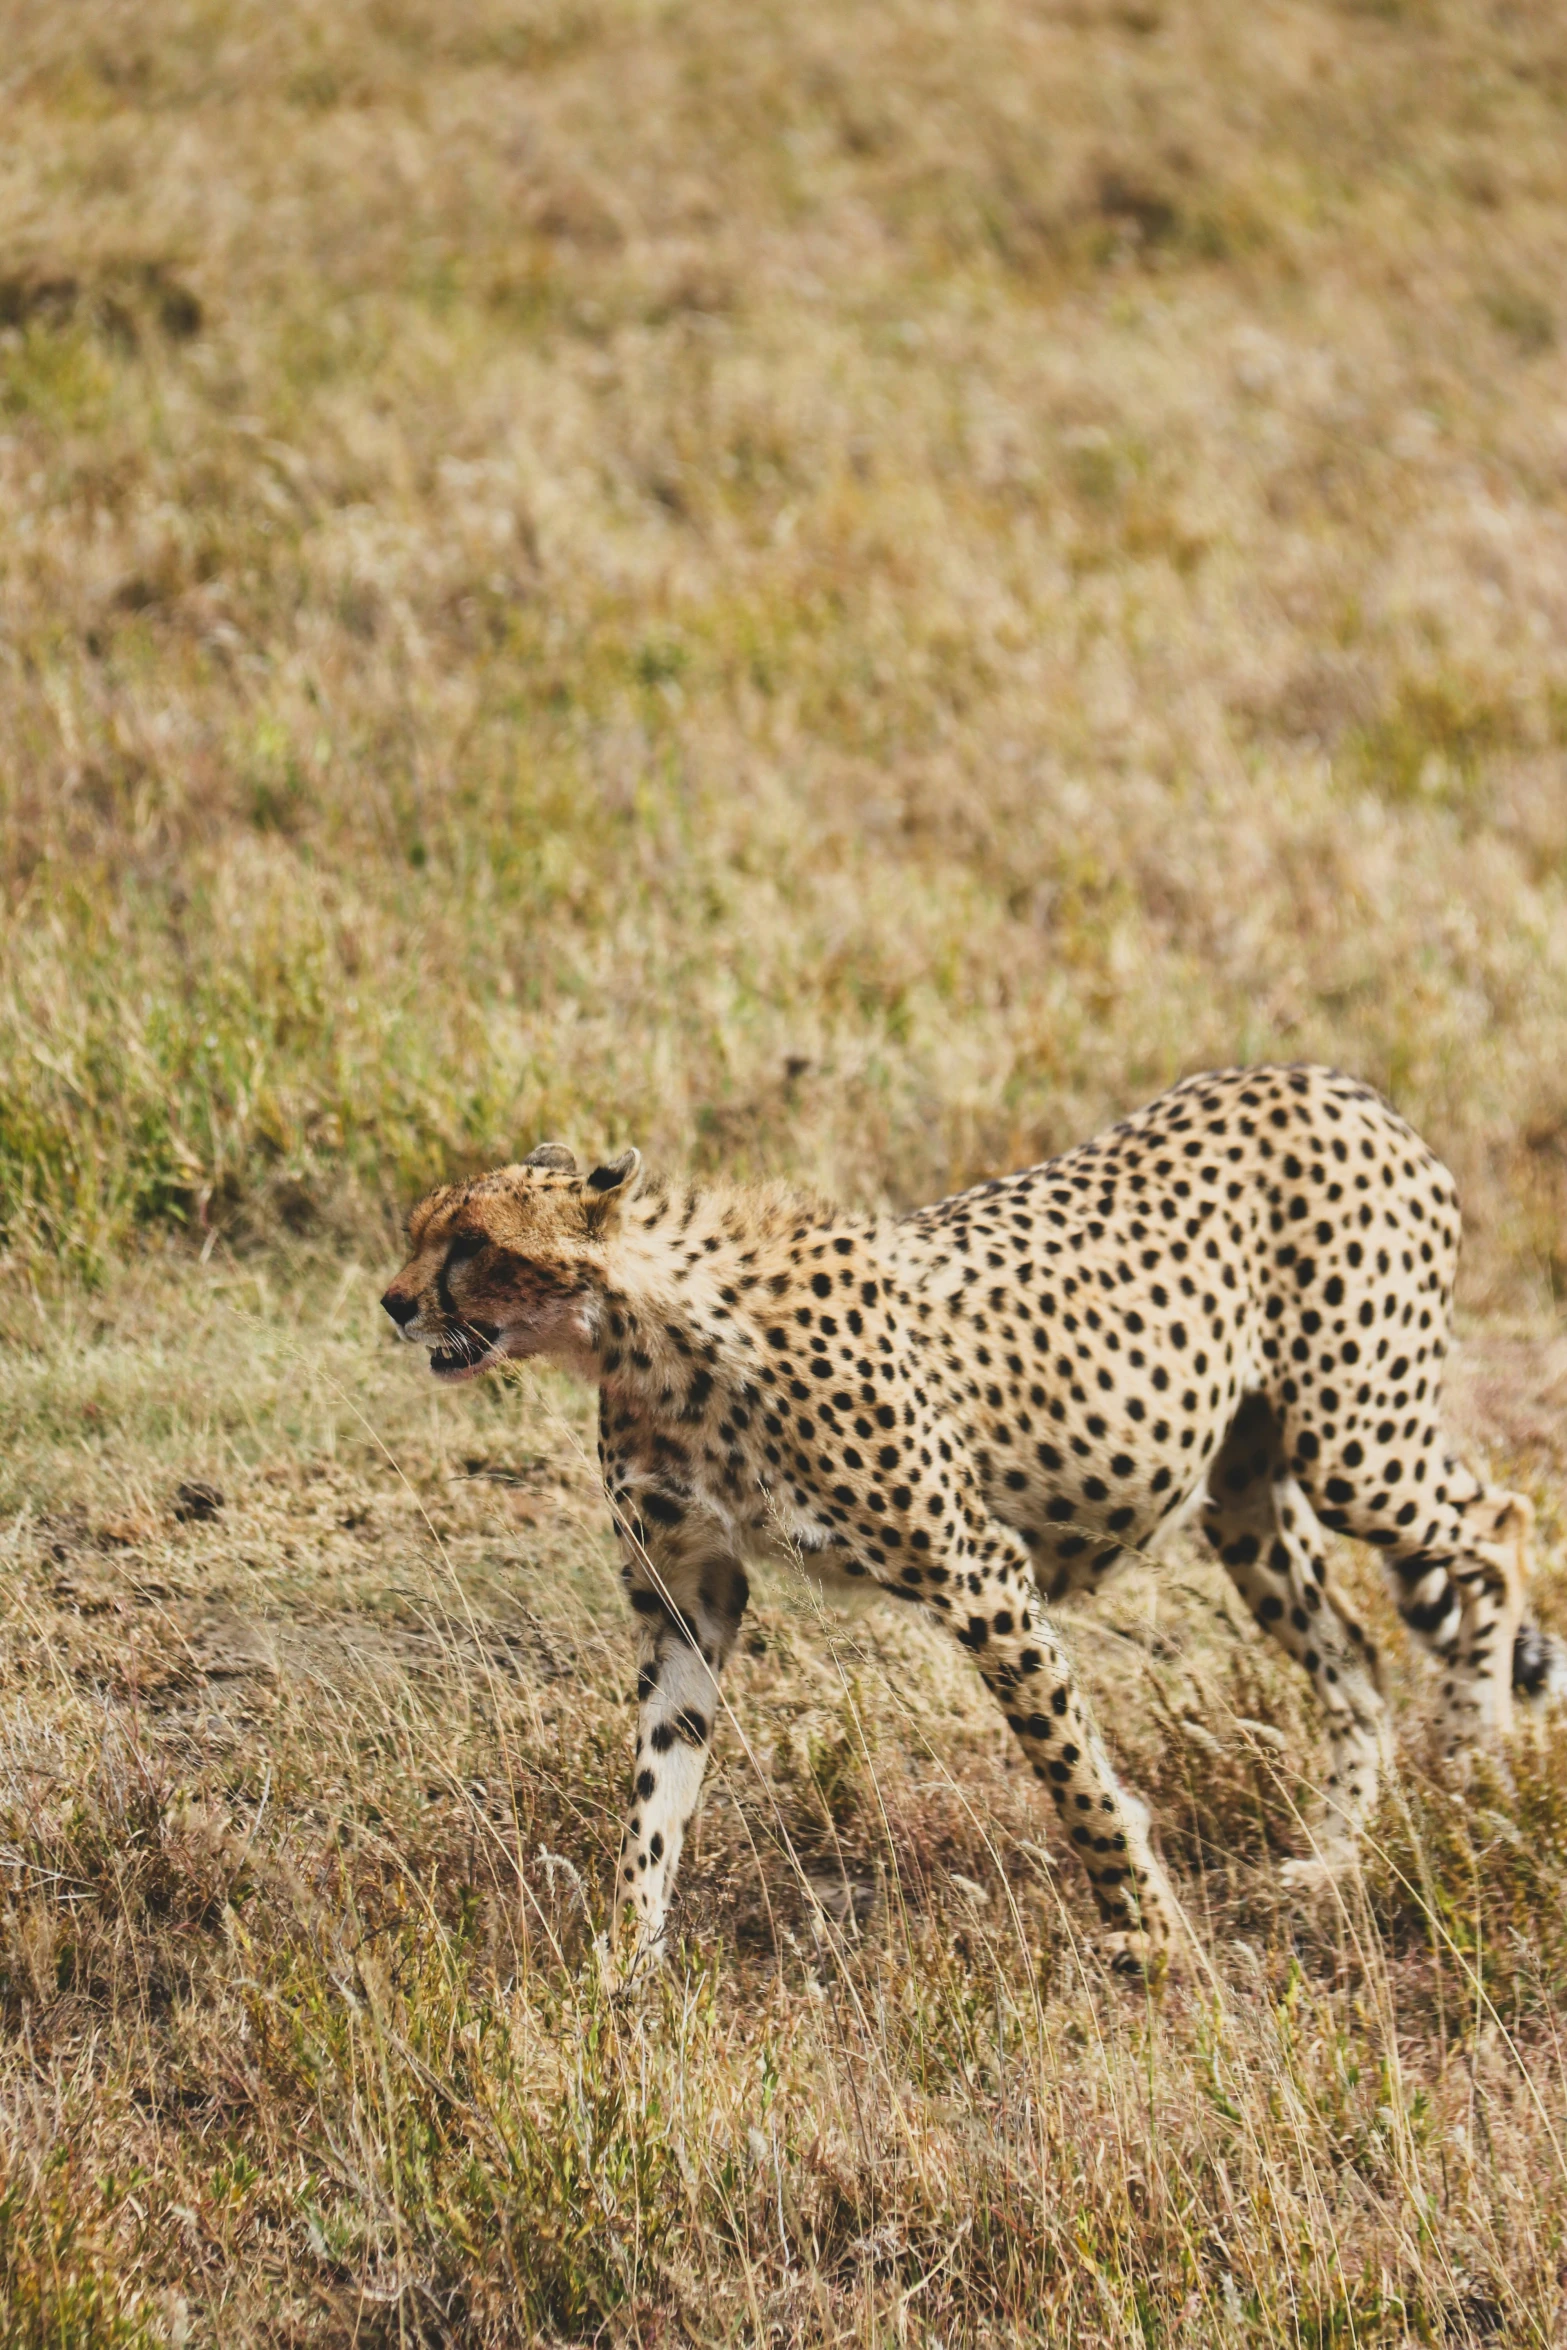 a cheetah walking in an open field with the sun shining on it